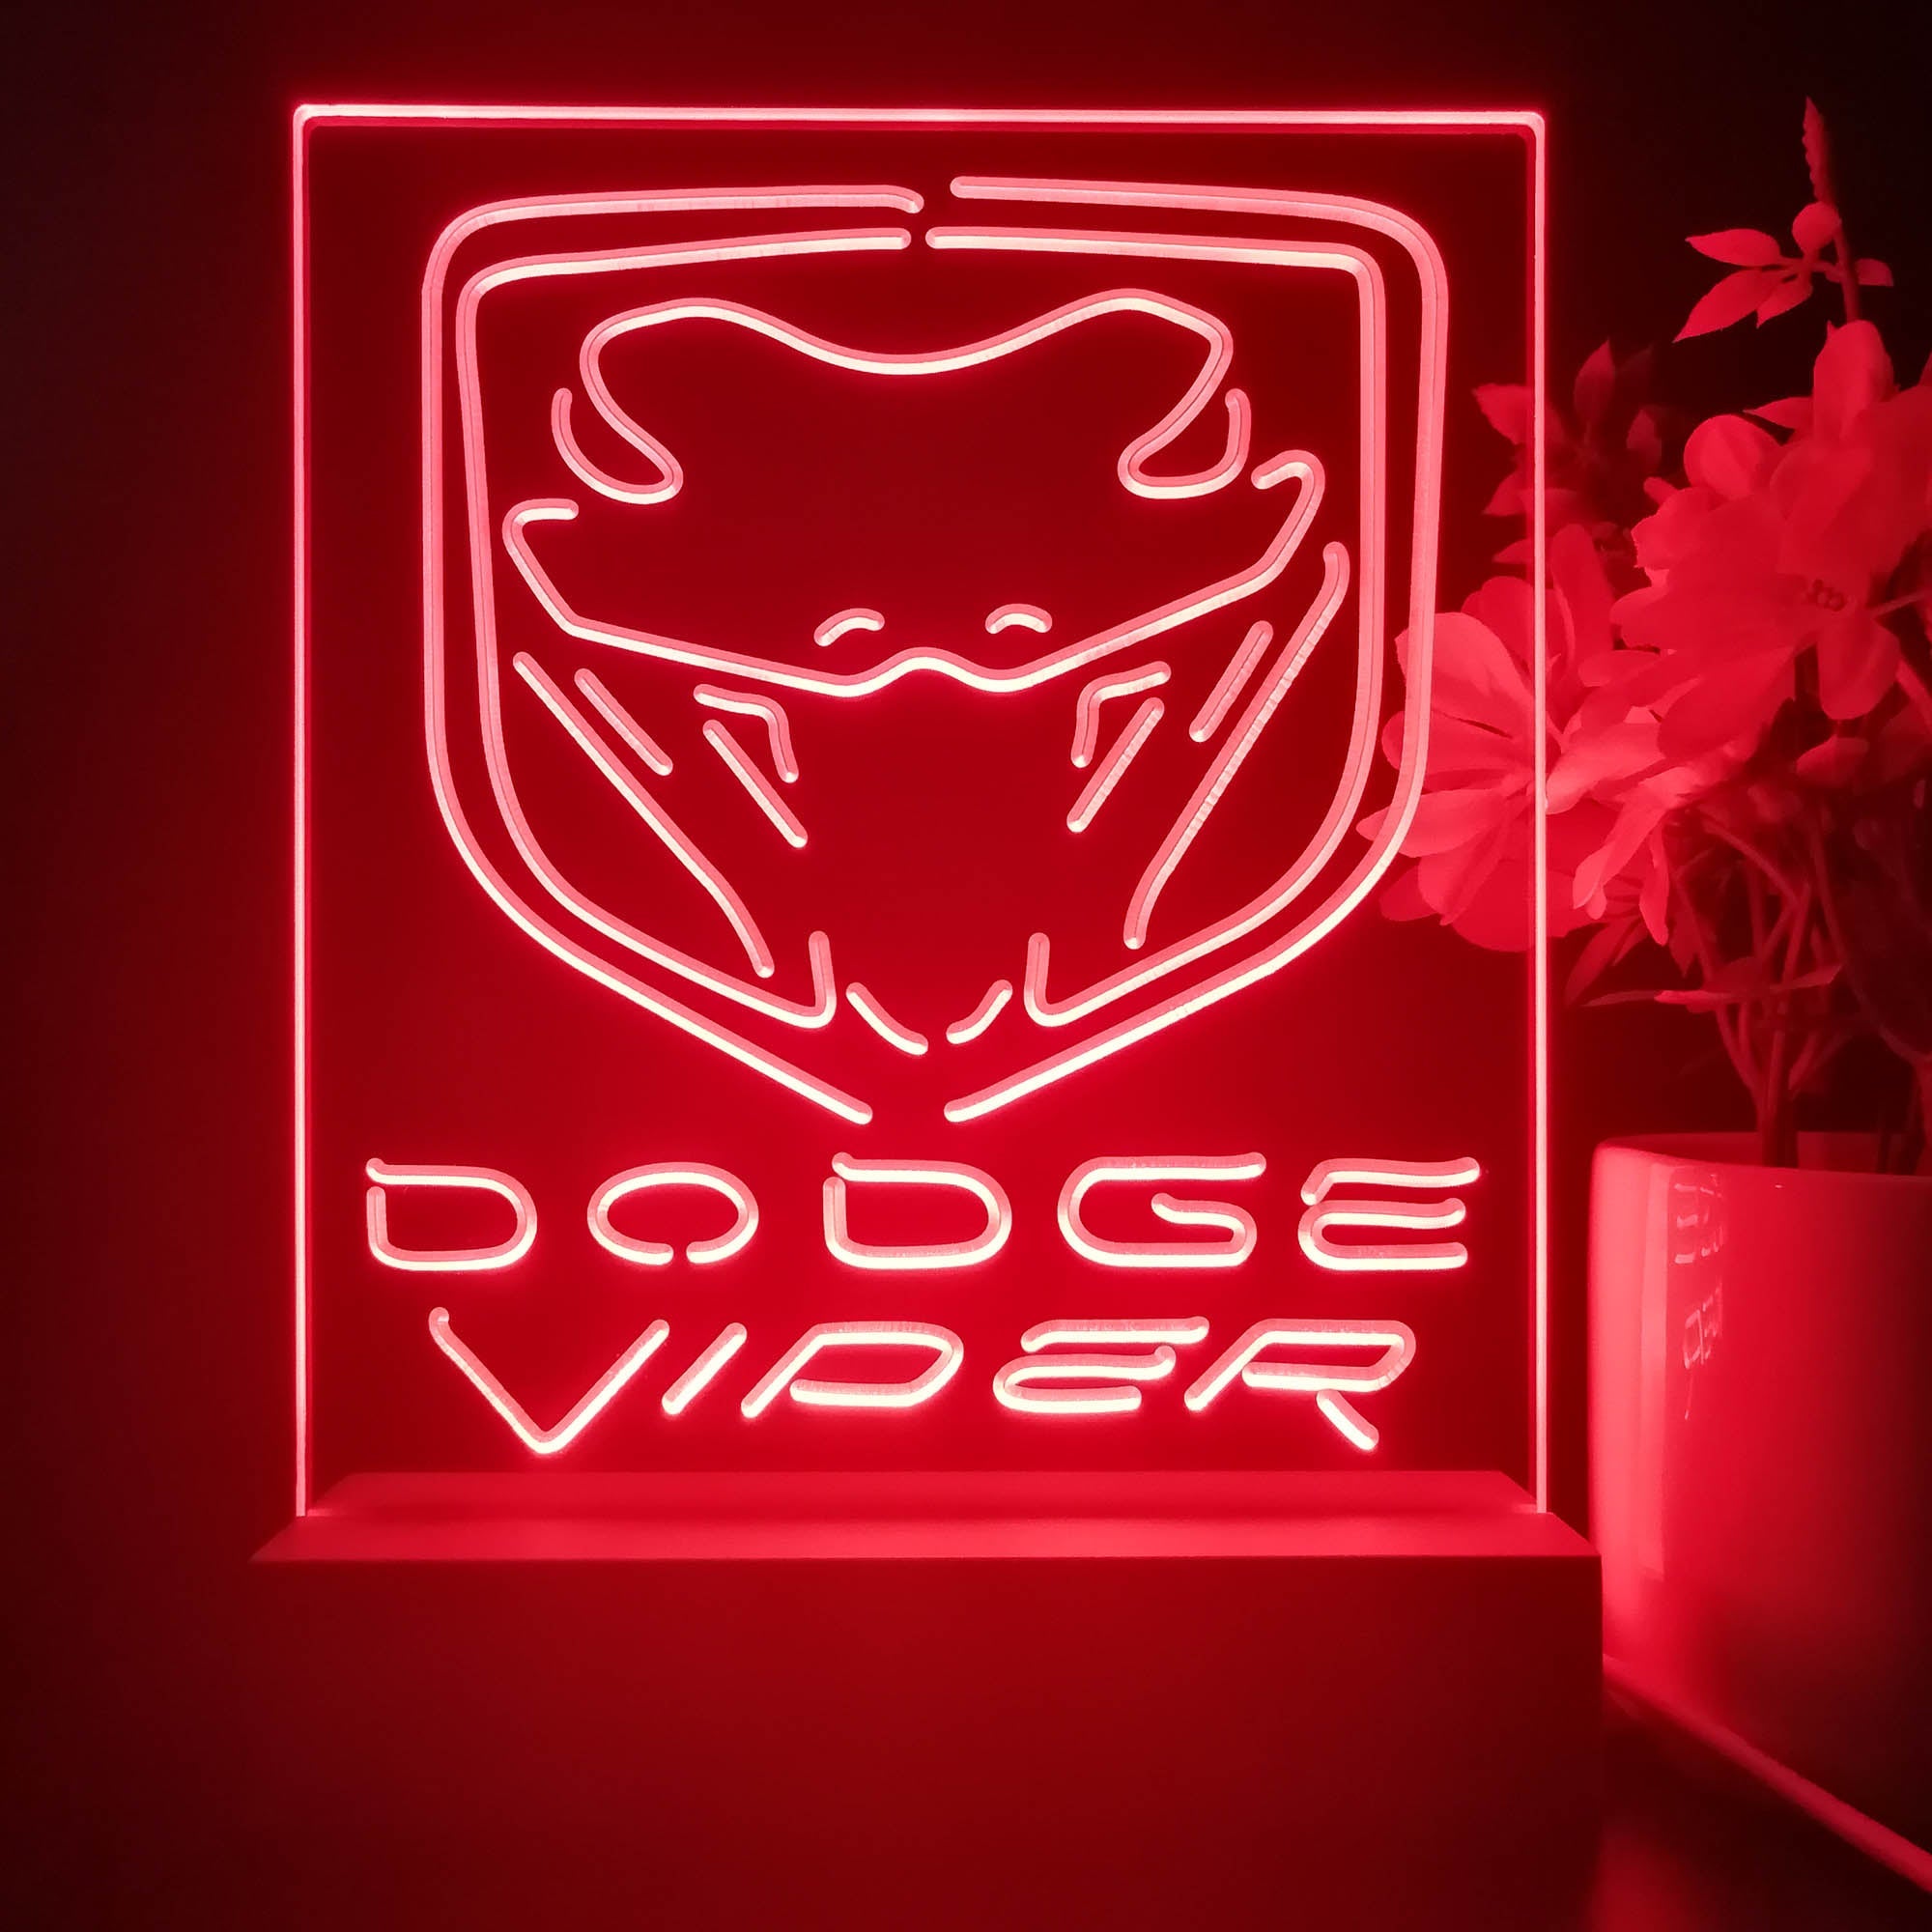 Dodge Viper Car 3D Illusion Night Light Desk Lamp